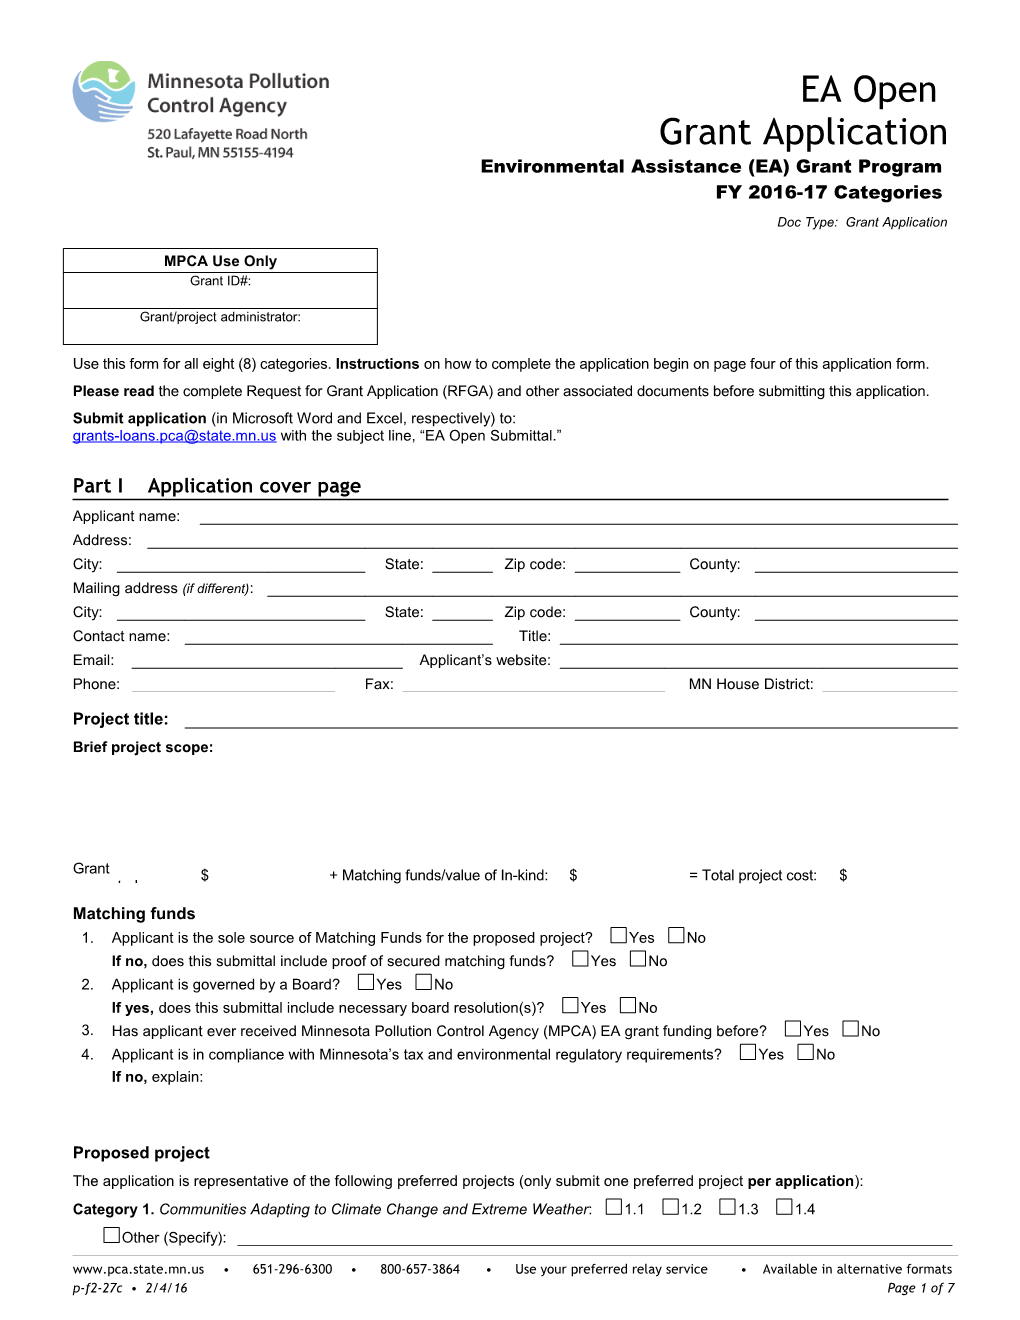 EA Open Grant Application - Environmental Assistance (EA) Grant Program - Form